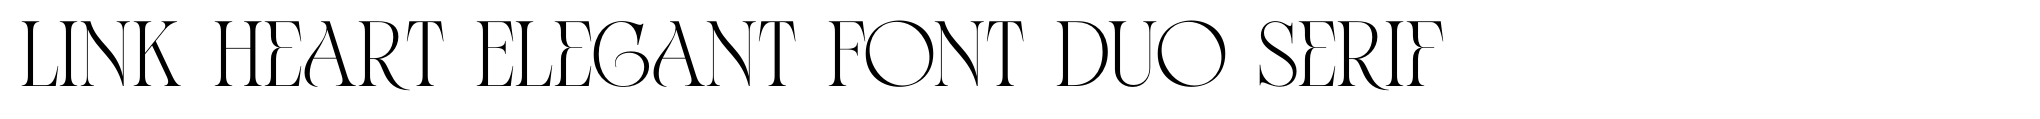 Link Heart Elegant Font Duo Serif image